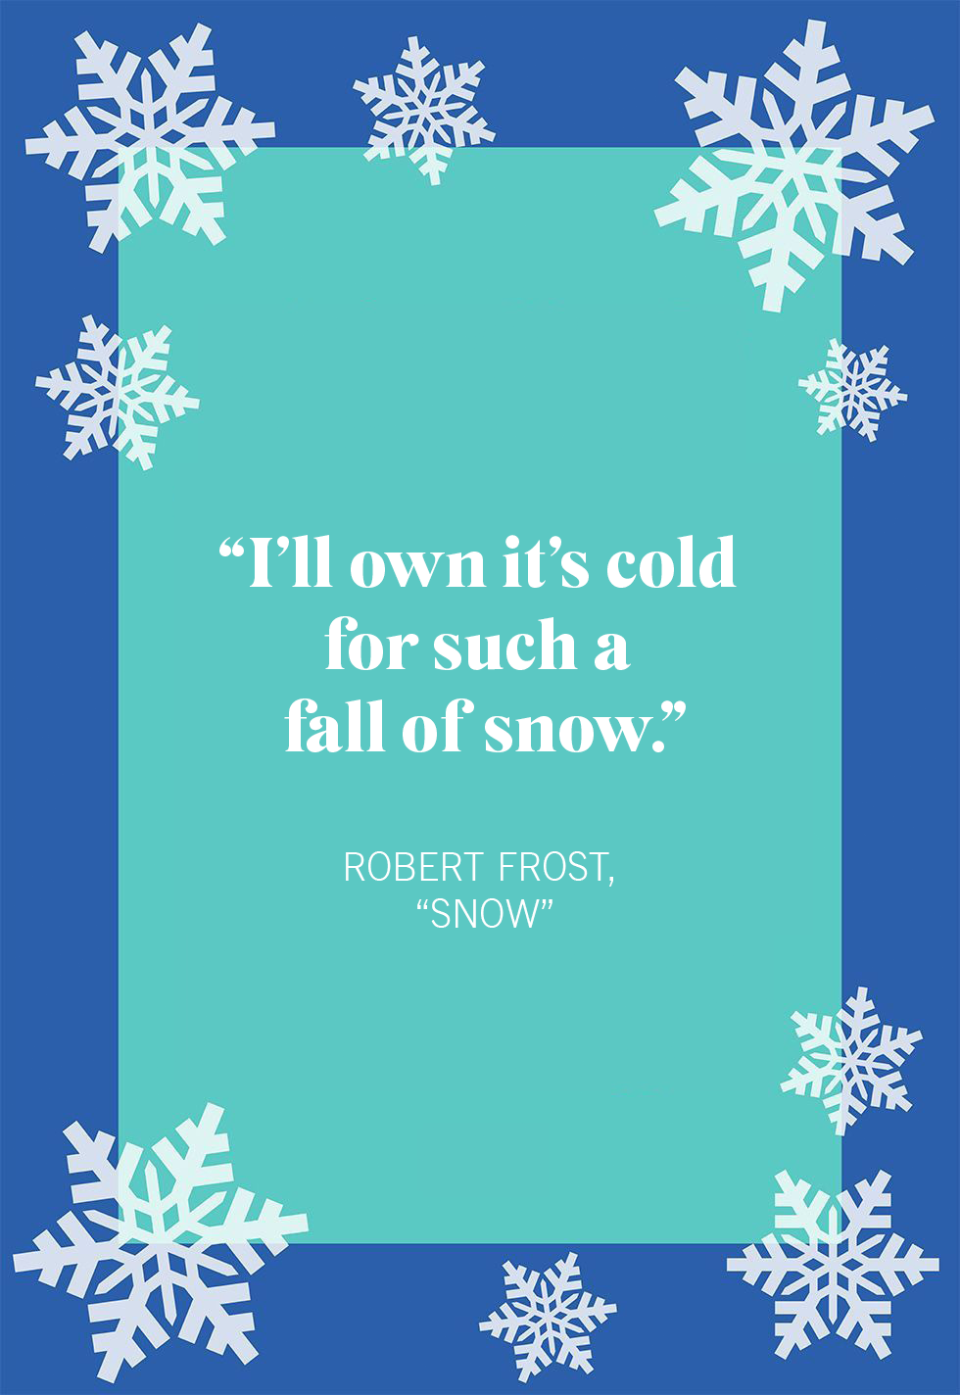 Robert Frost,  “Snow”